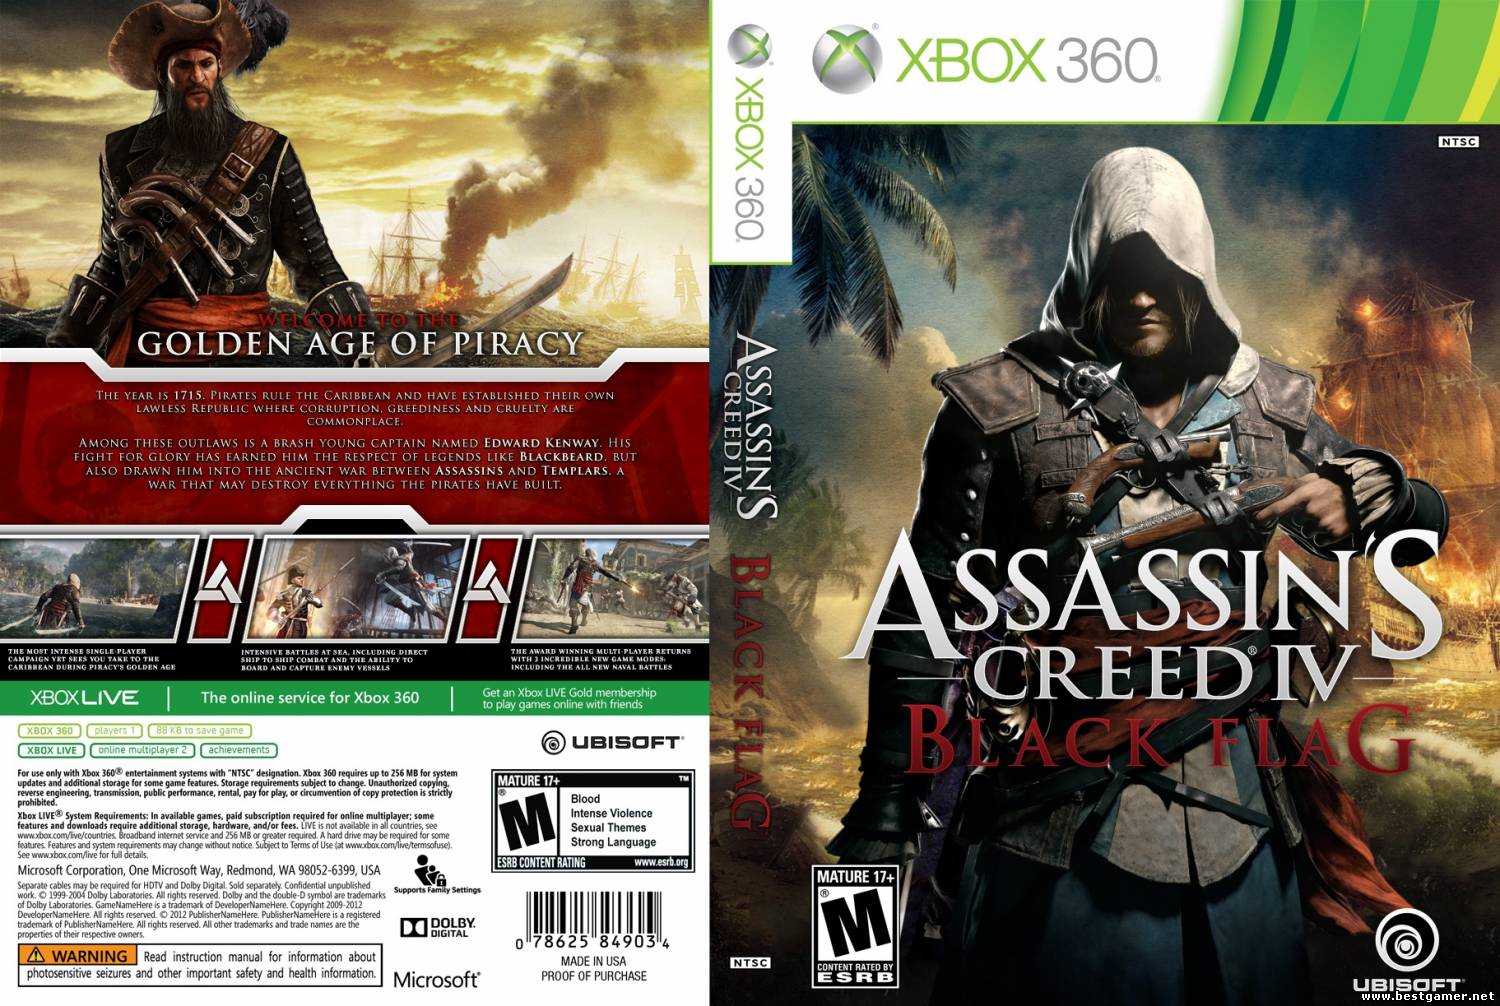 Формат игр xbox. Обложки игр для Xbox 360. Ассасин Крид 4 обложка хбокс 360. Assassins Creed Black Flag Xbox 360 обложка. Обложки игр ассасин Крид 4 хбокс 360.